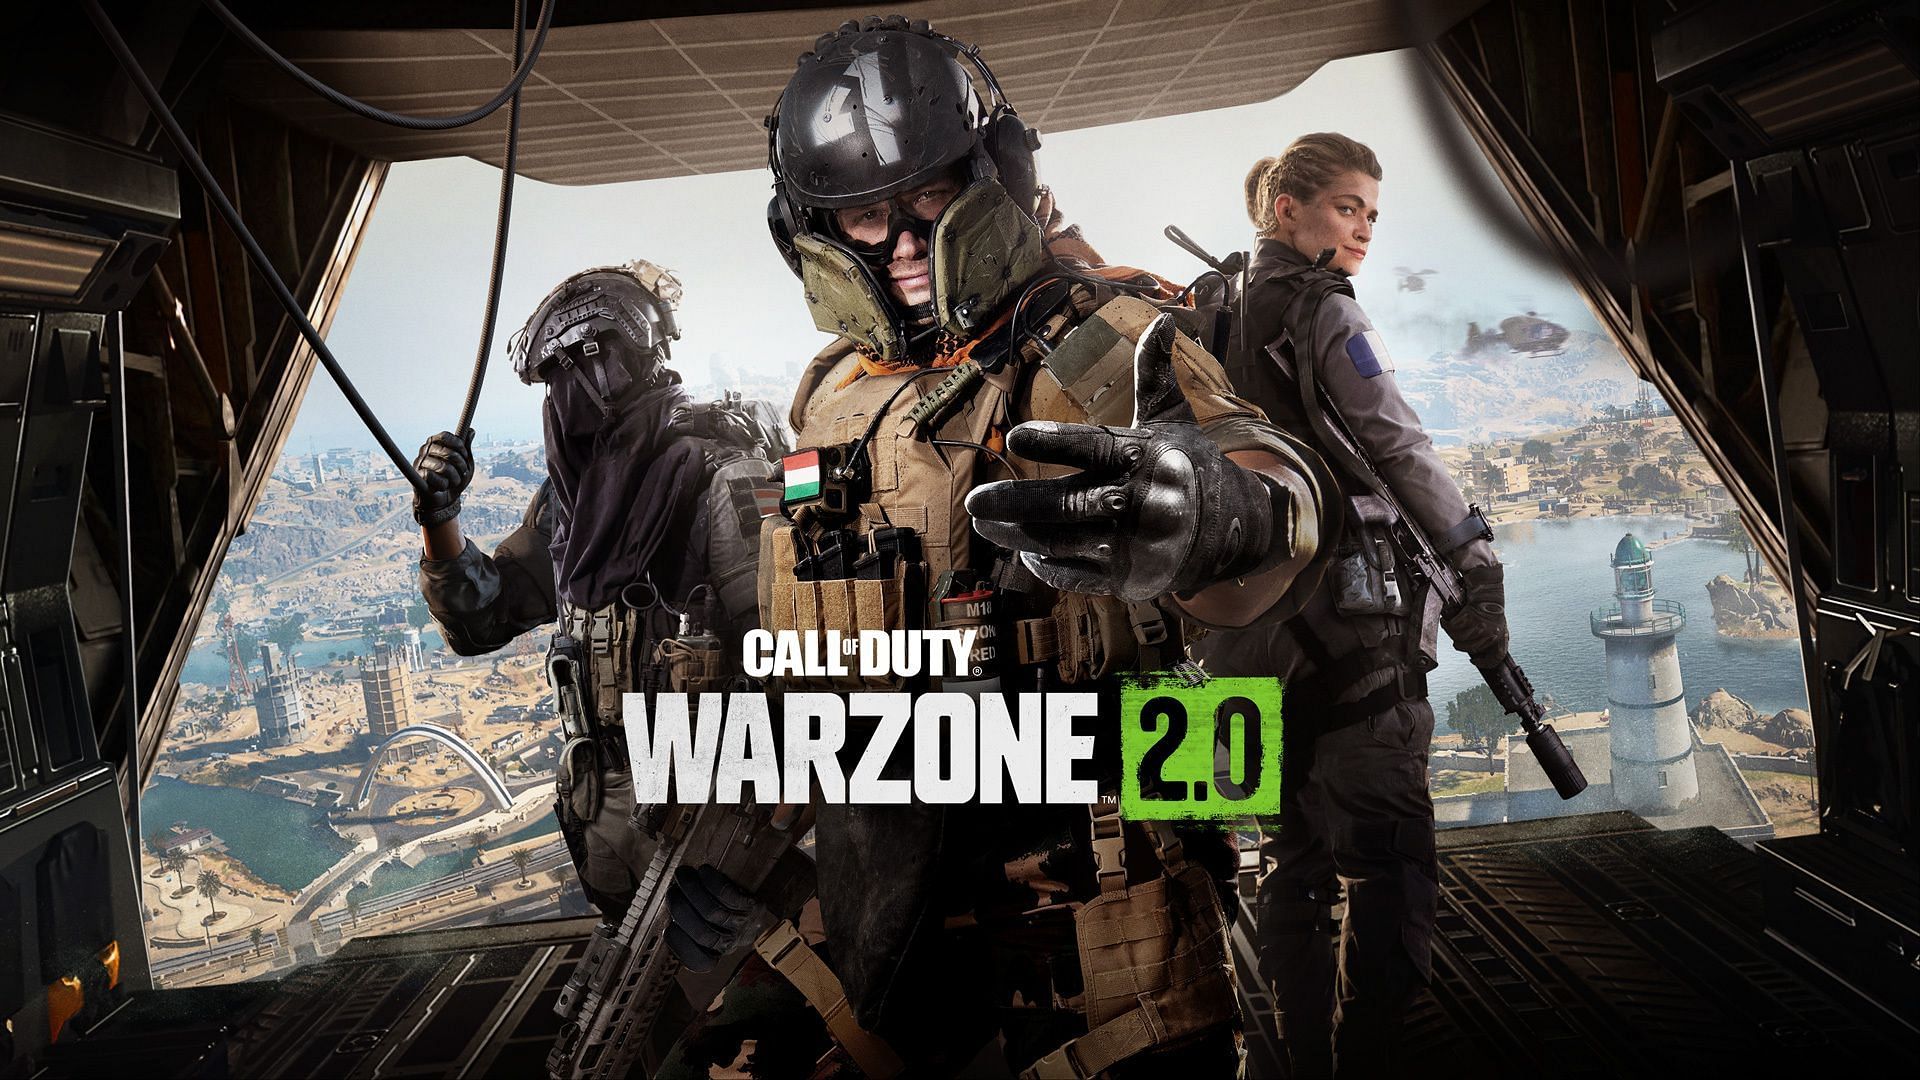 Battle royale - COD Warzone 2.0 (Image via Activision)